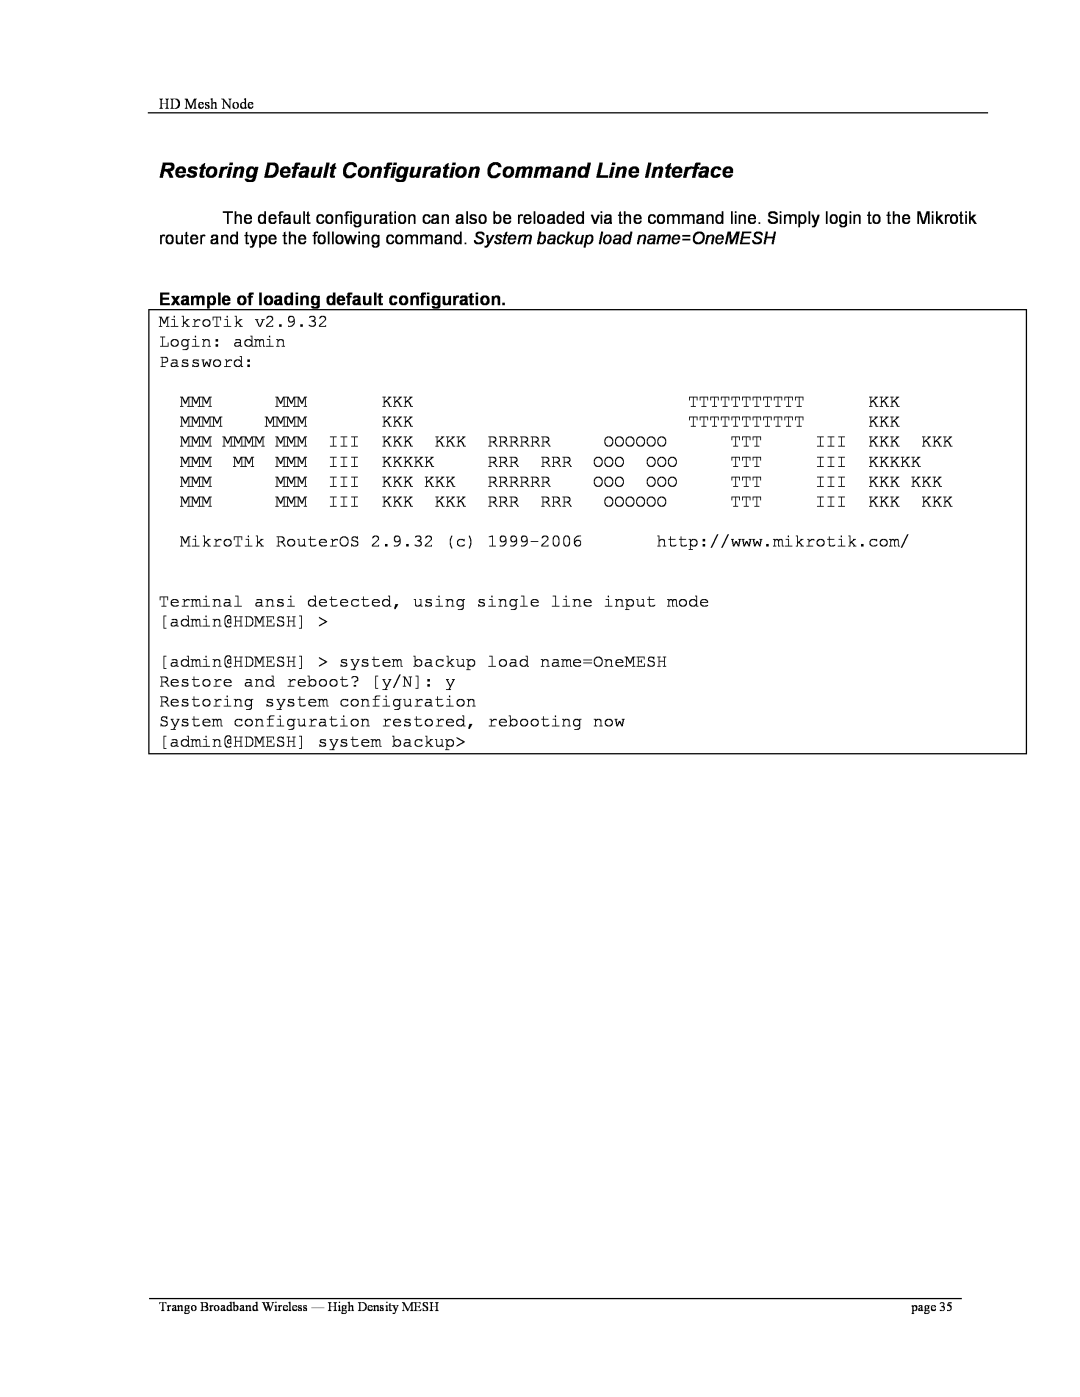 Trango Broadband High Density Mesh System user manual Restoring Default Configuration Command Line Interface 